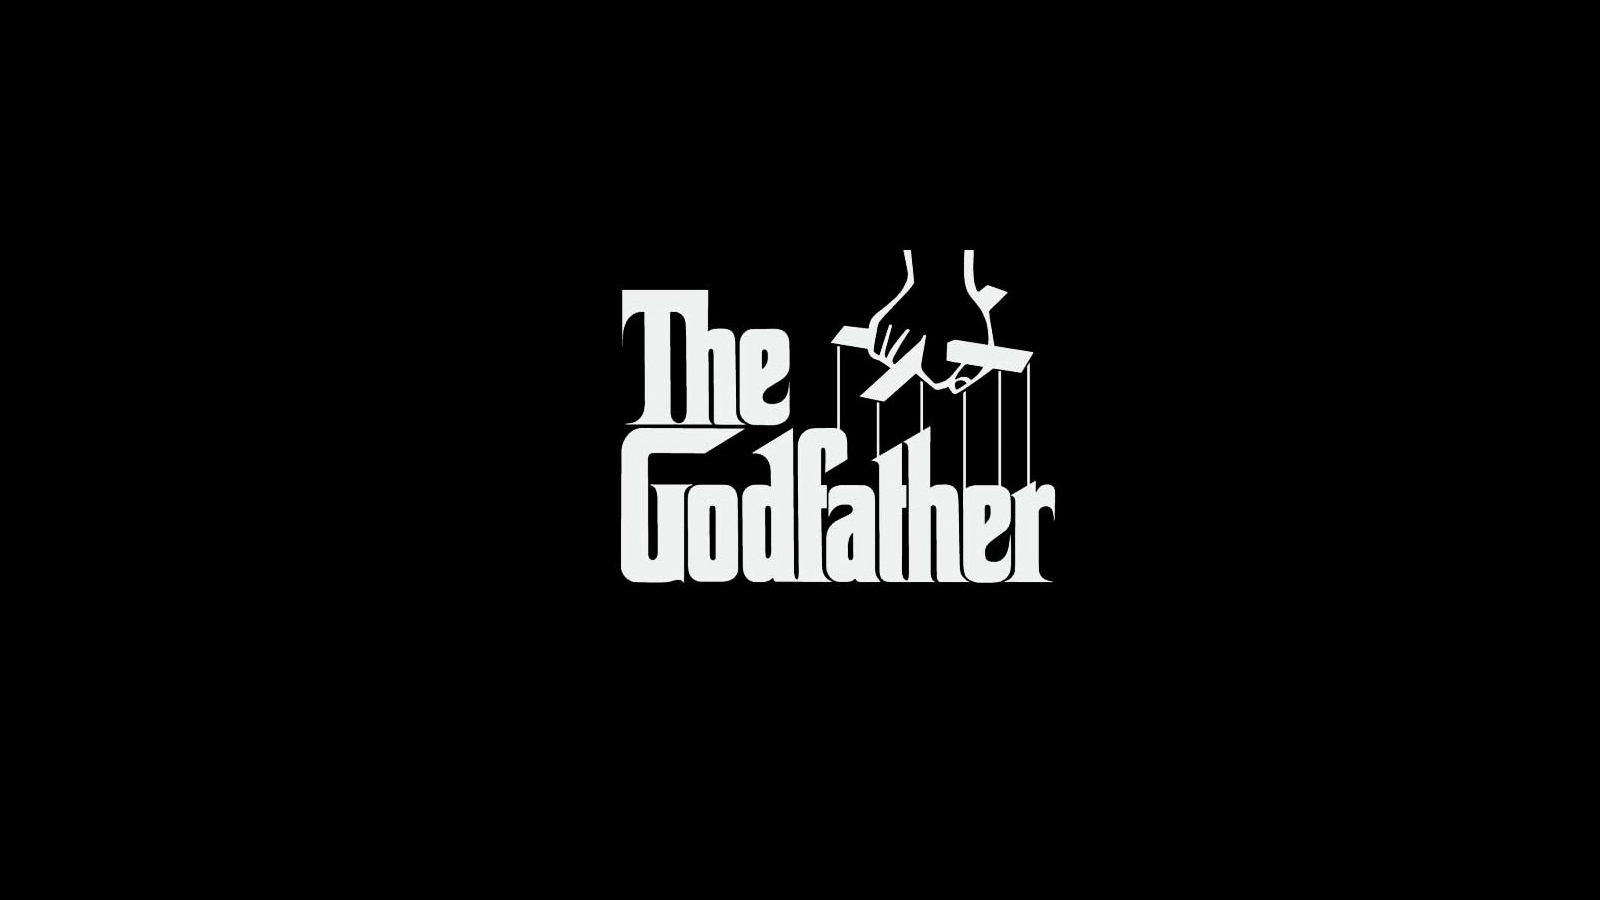 The Godfather Puter Wallpaper Desktop Background